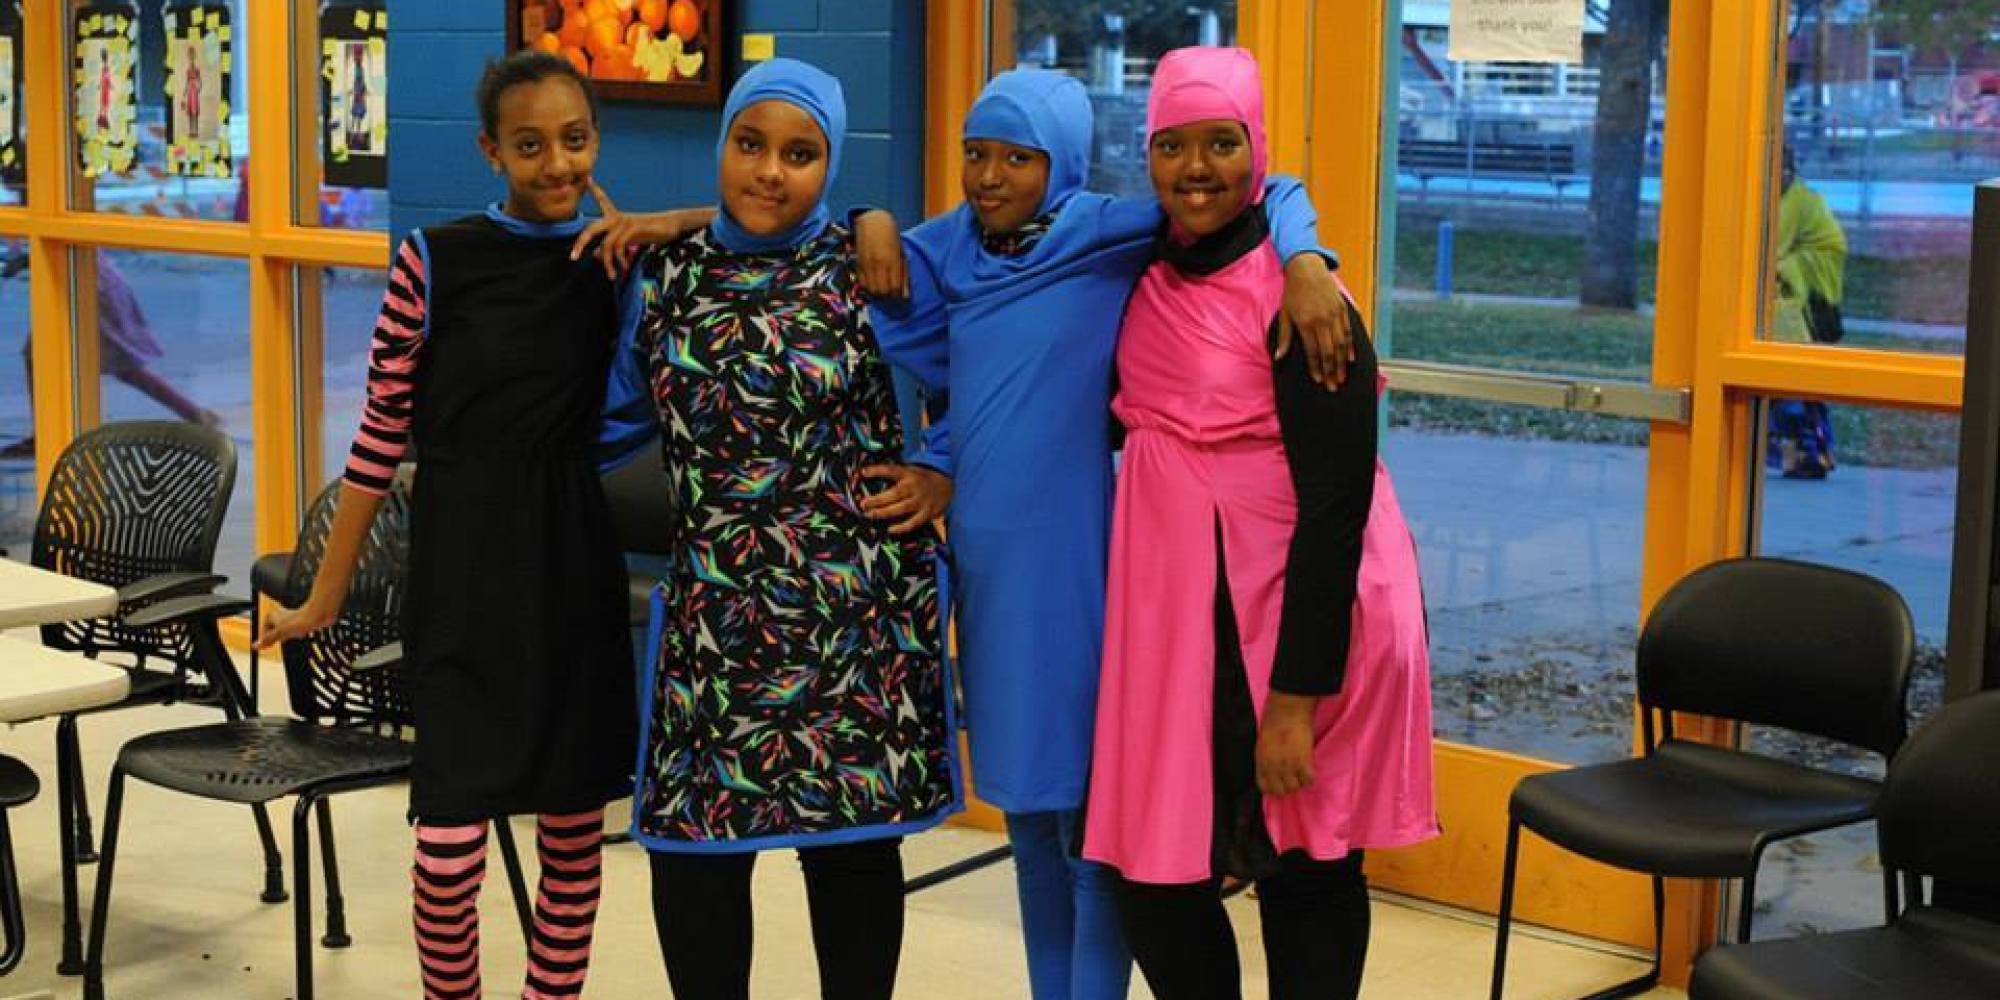 Muslim Girls Design Their Own Culturally Appropriate Basketball